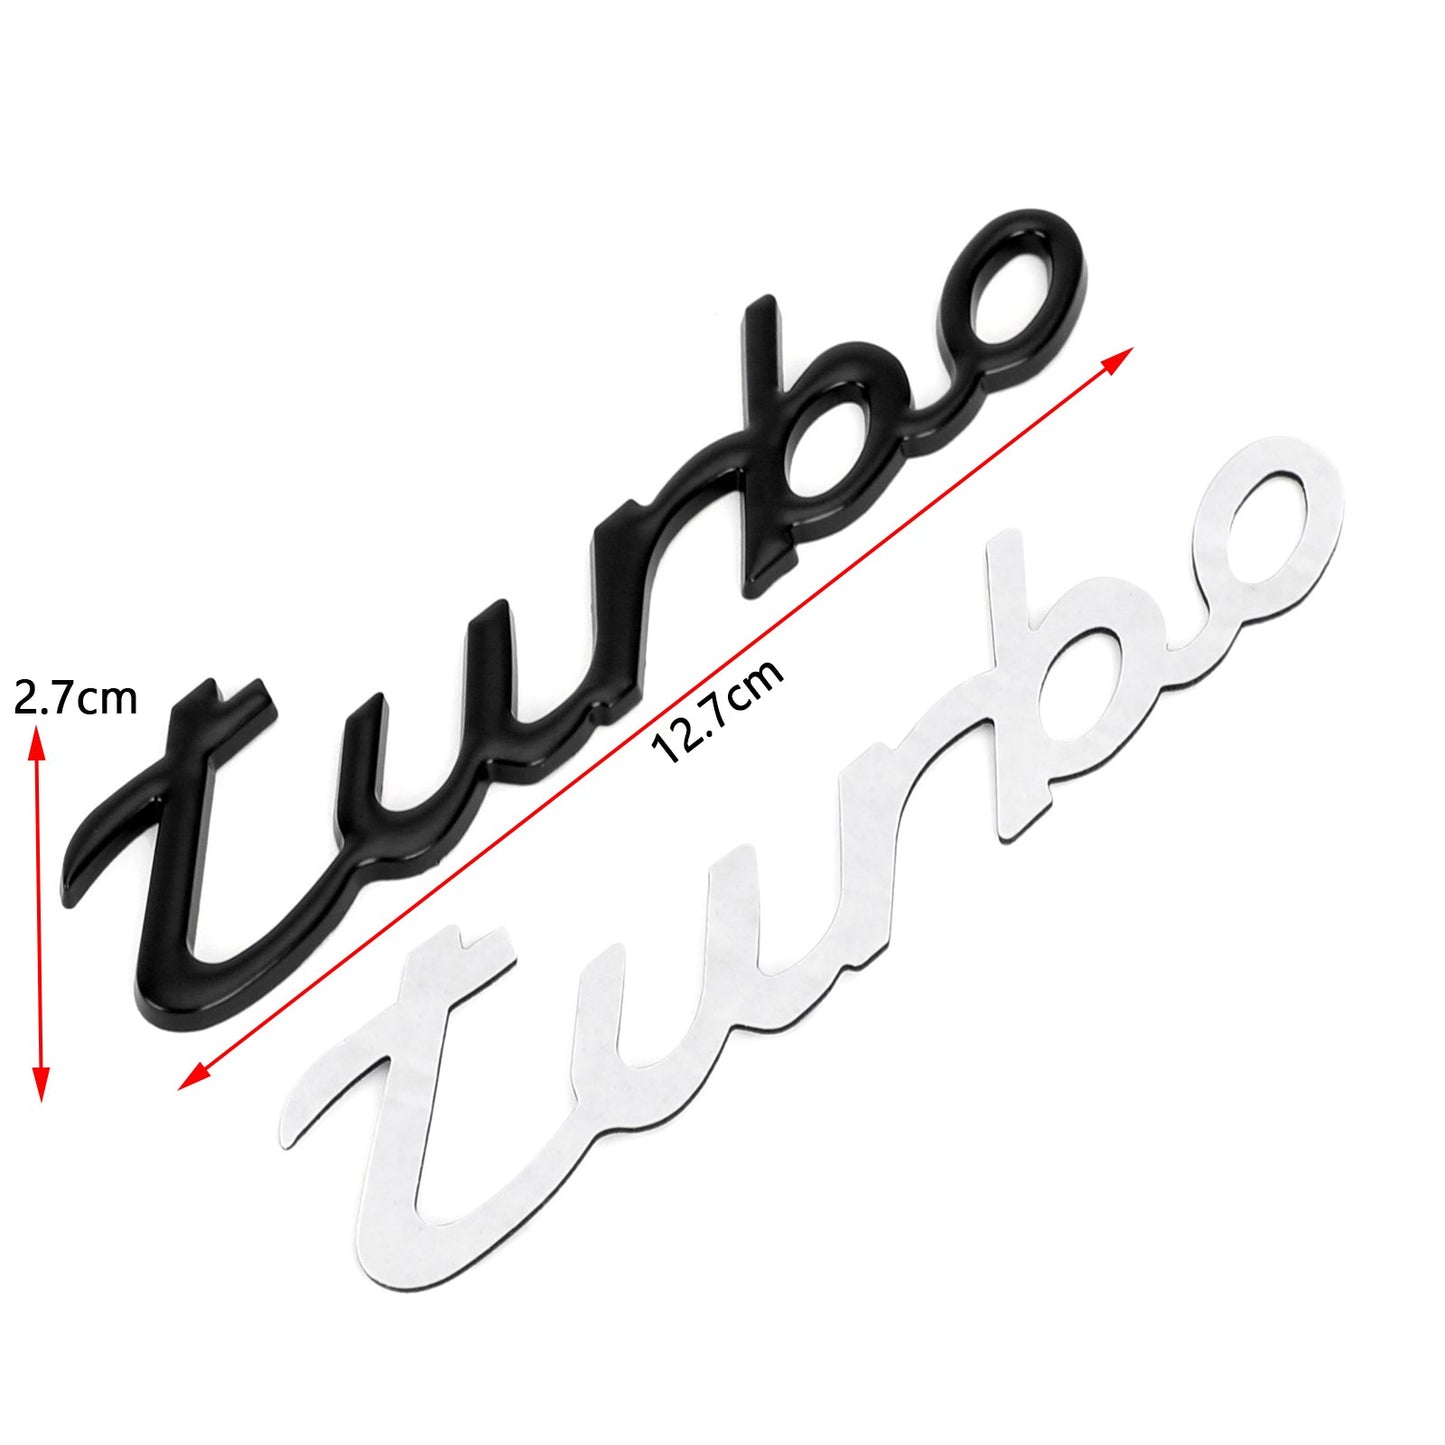 3D-Autoaufkleber, Überzug, Metall, Turbo-Logo, Emblem, Abzeichen, Schwarz